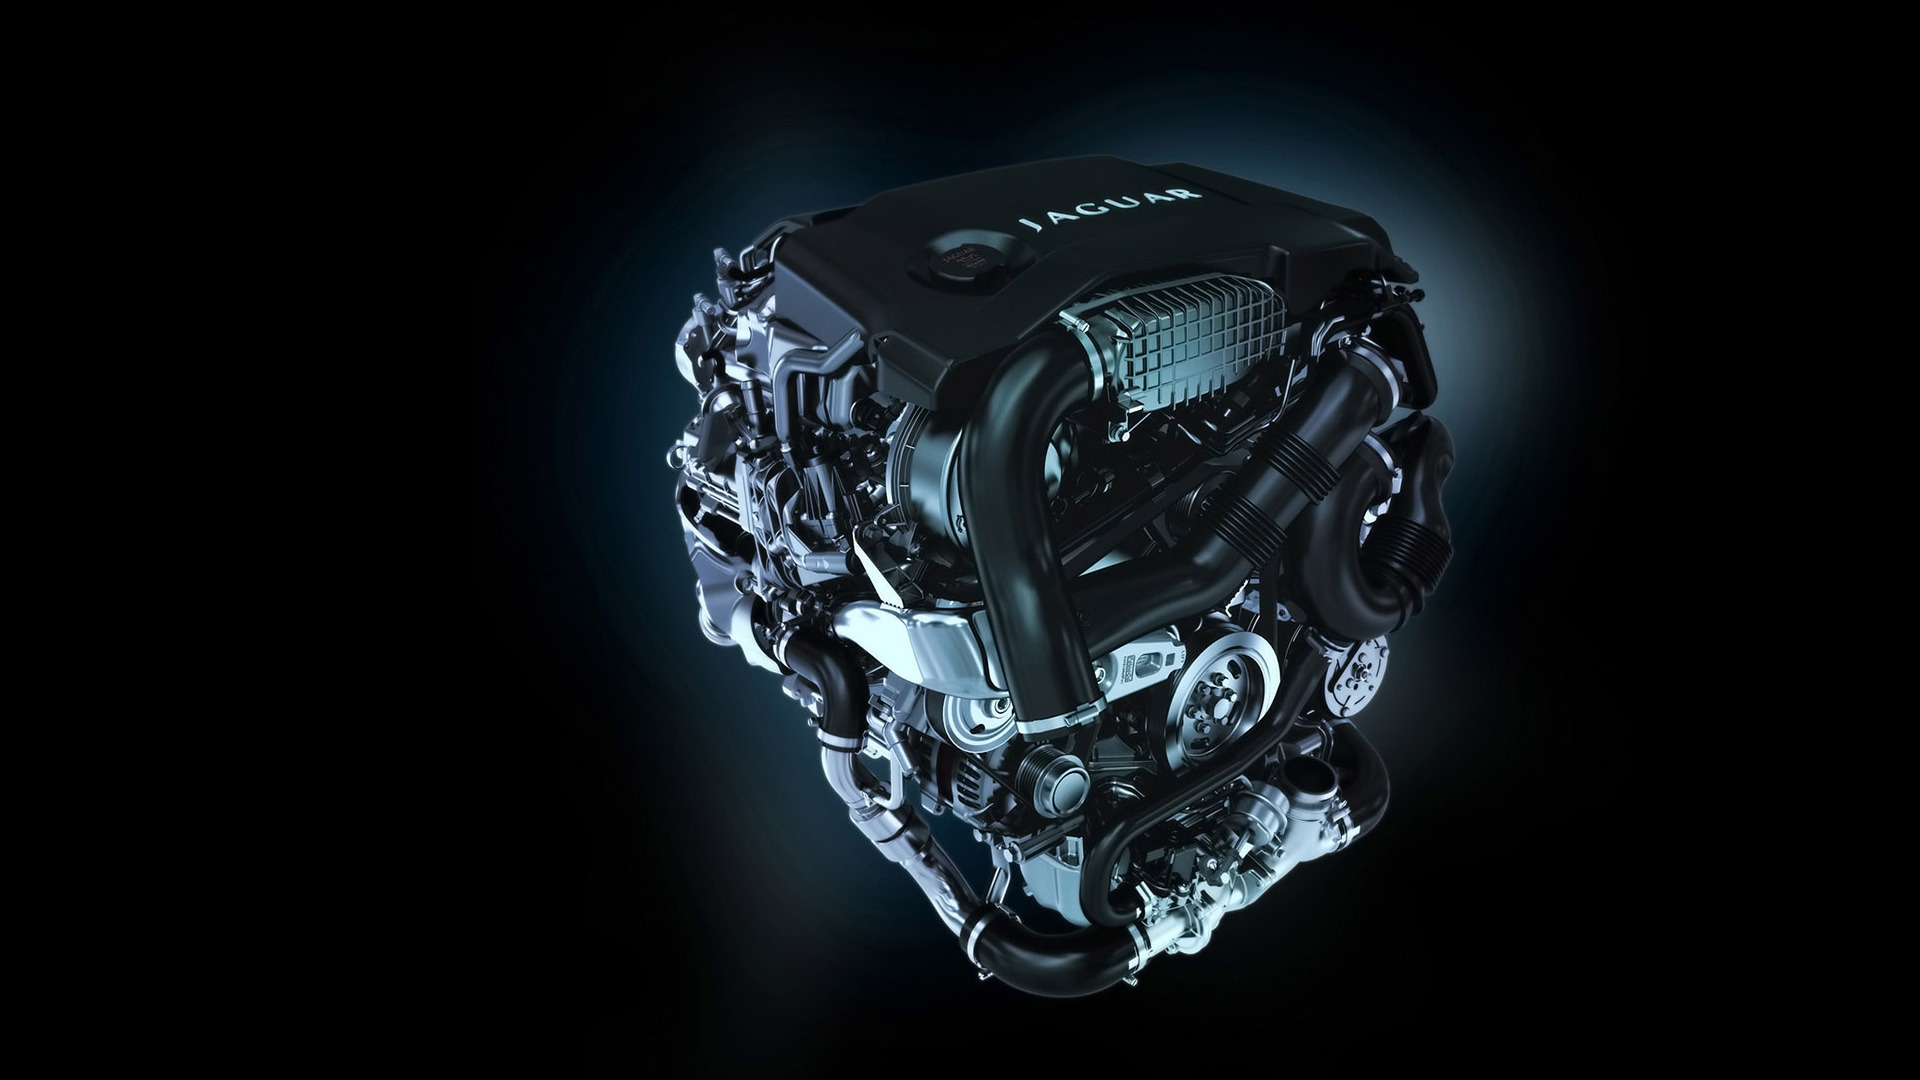 Jaguar XF Diesel S Engine for 1920 x 1080 HDTV 1080p resolution